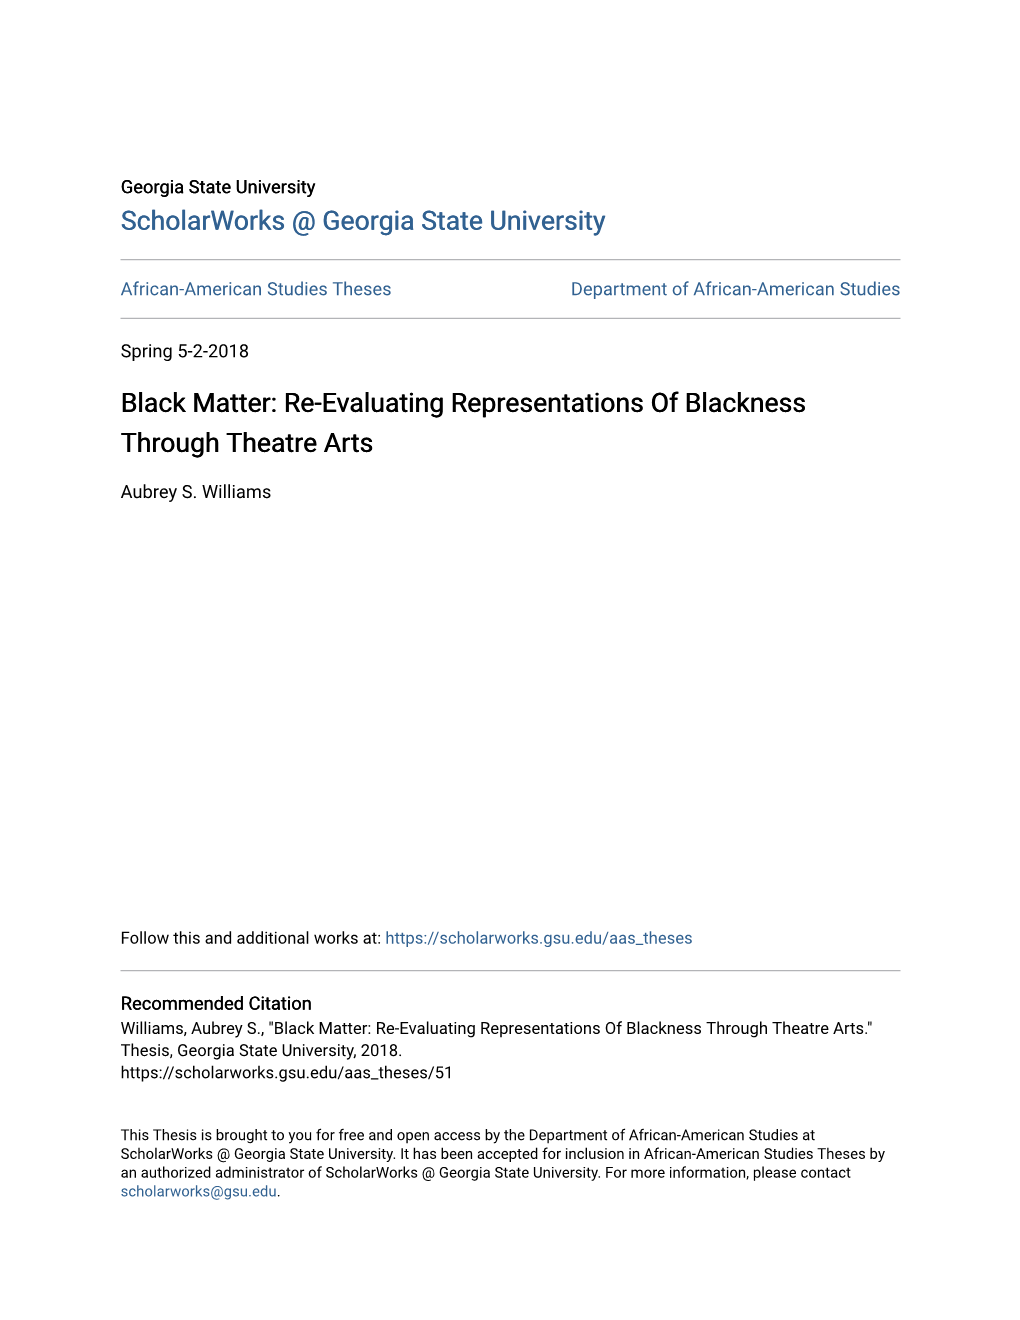 Black Matter: Re-Evaluating Representations of Blackness Through Theatre Arts